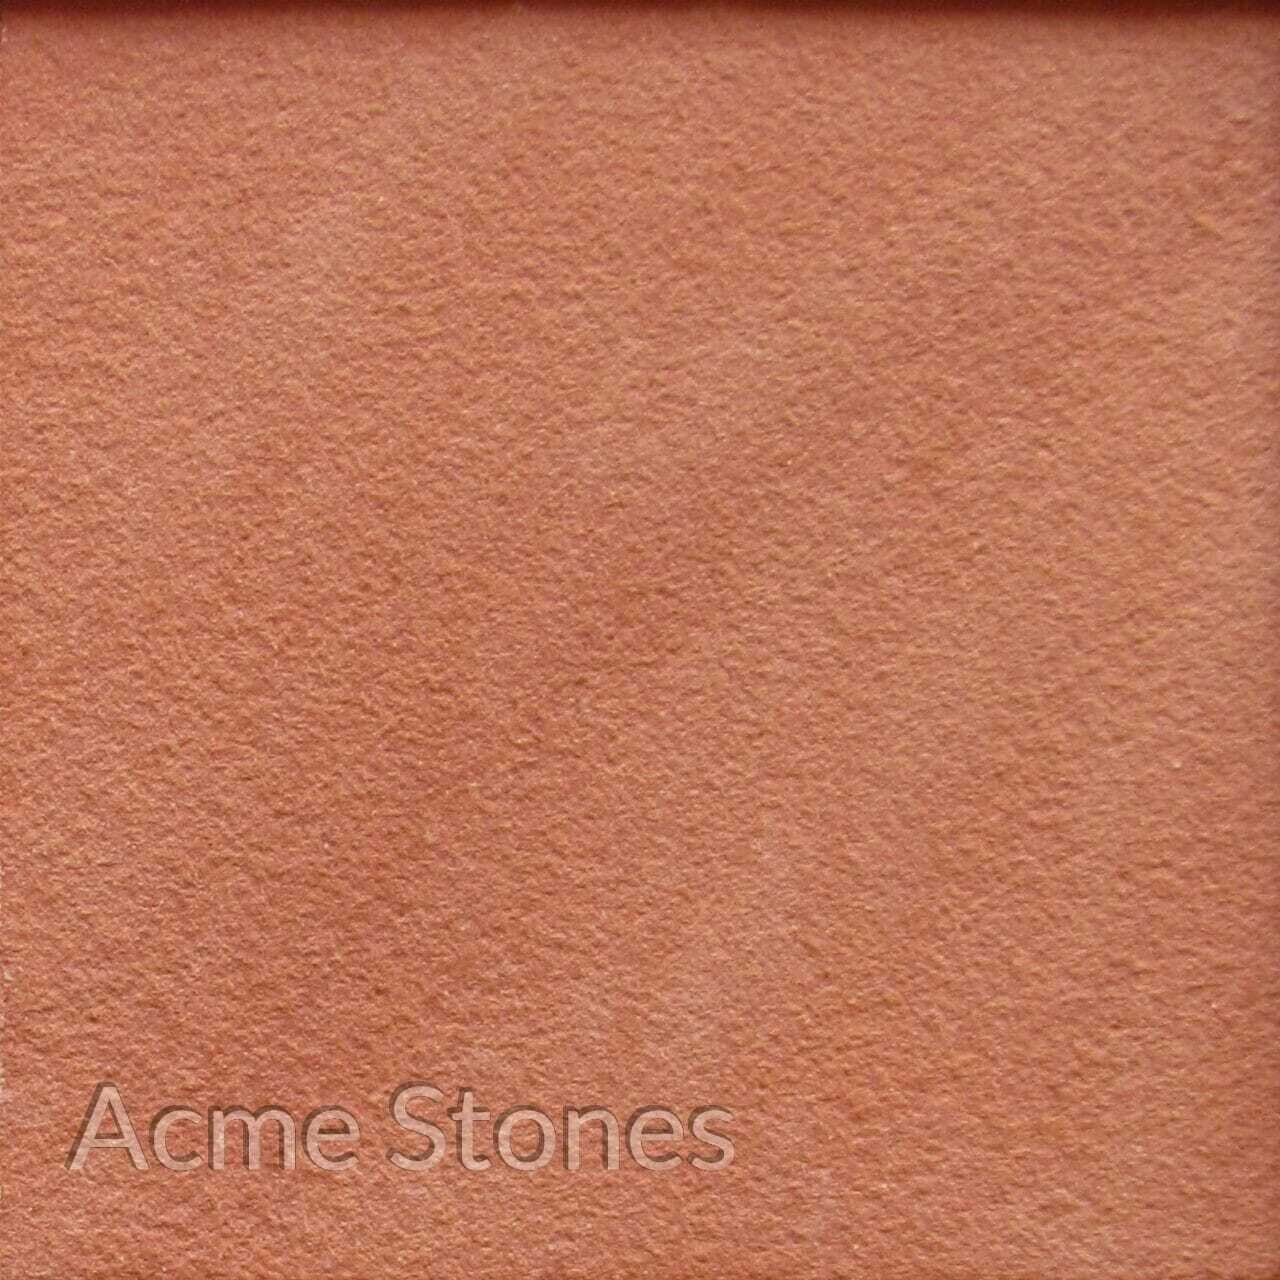 Sandstone Red Tiles